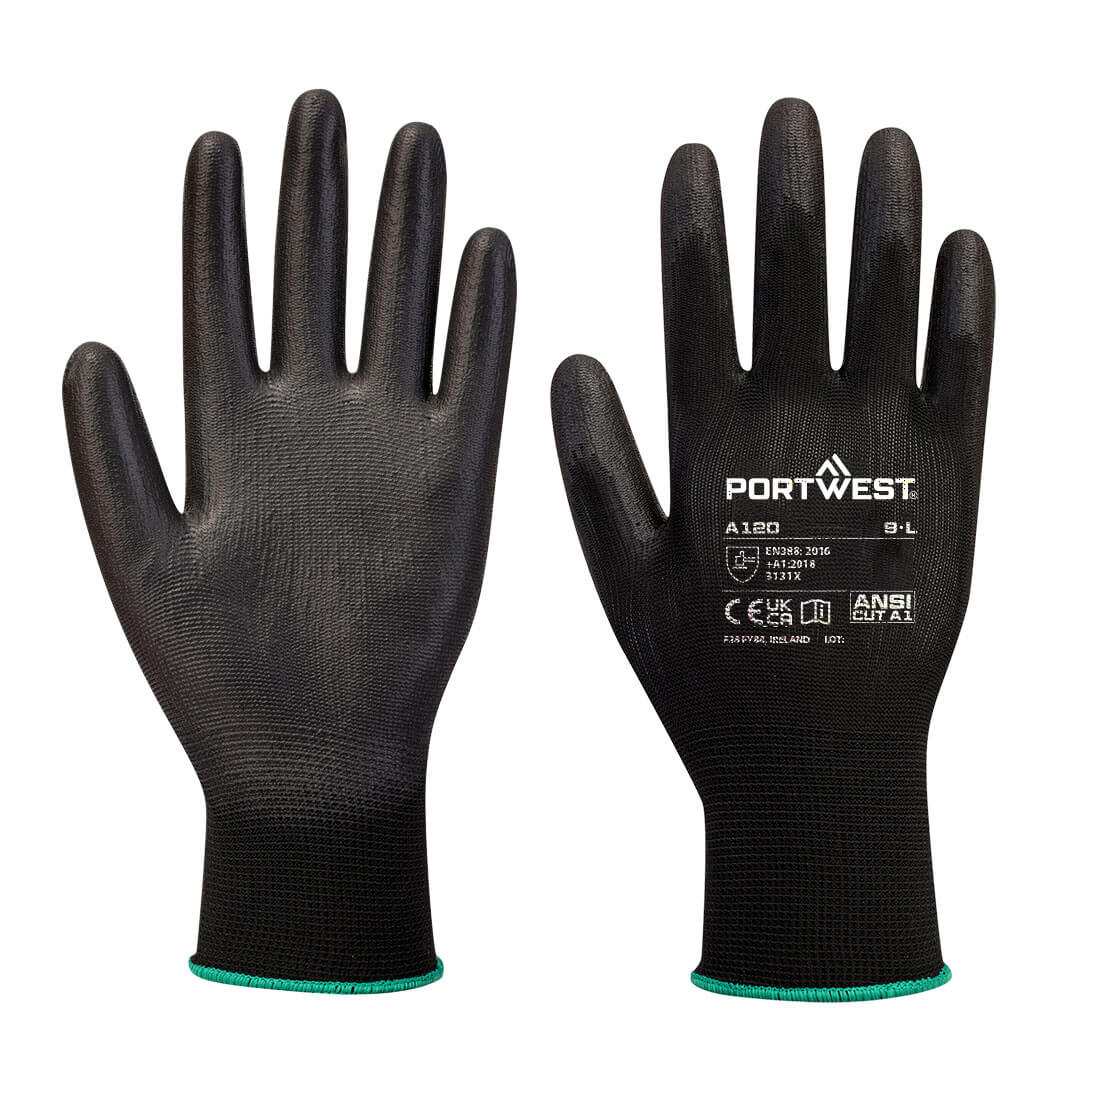 Pack of 12 - PU Palm Glove (Black) - Size 12 - XXXL